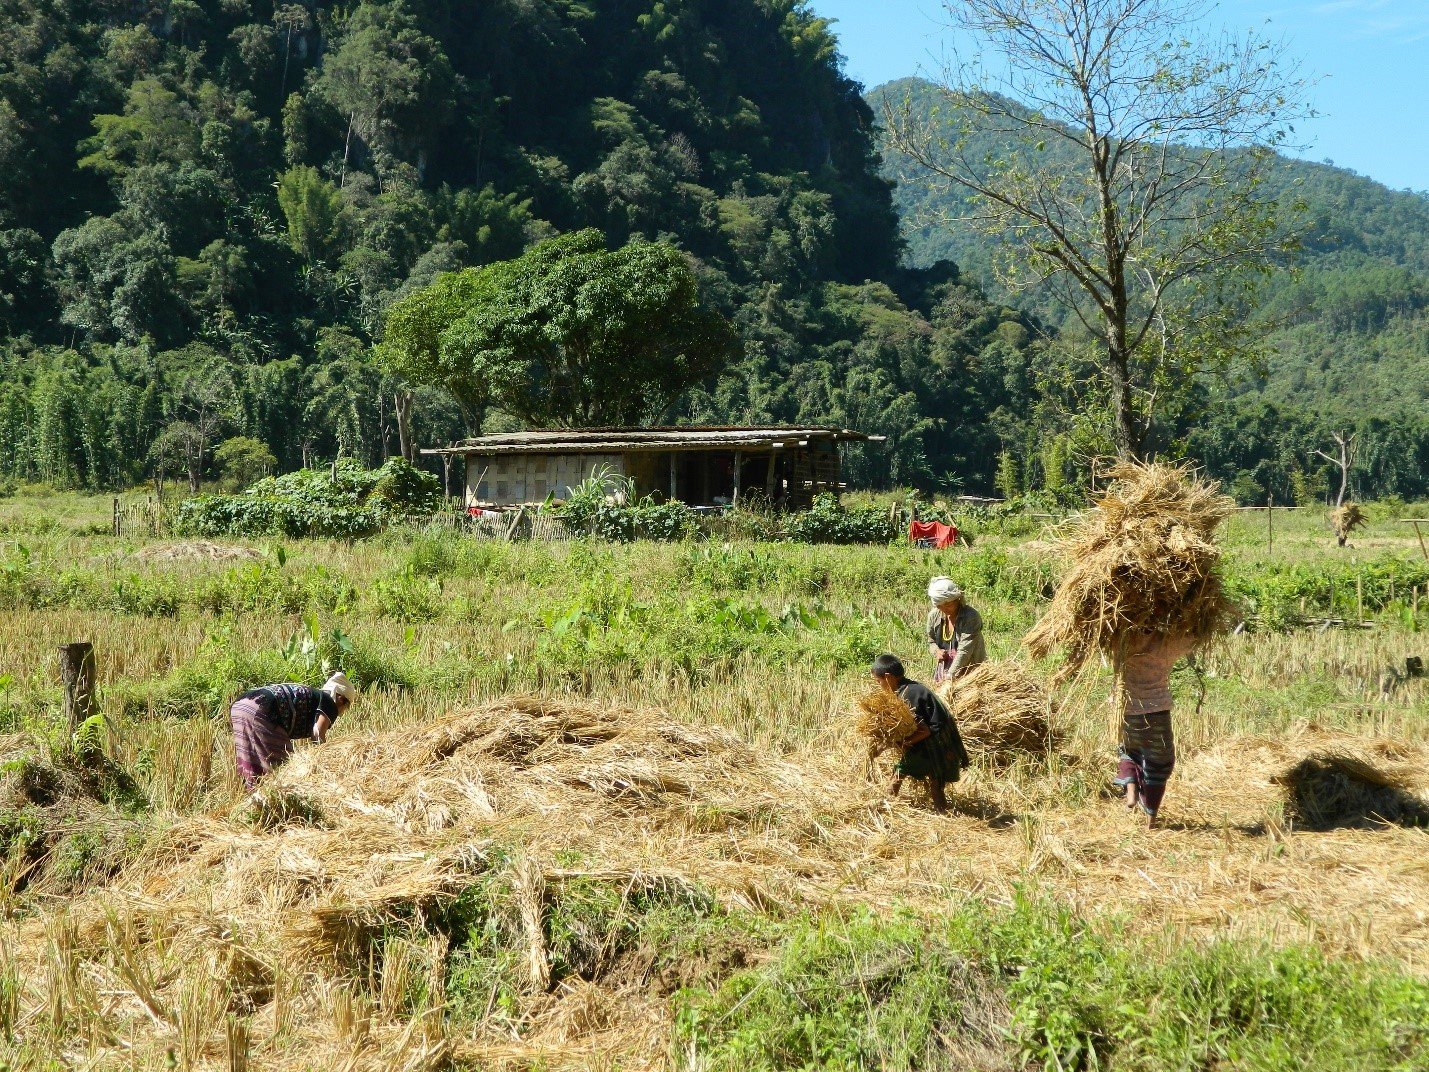 Harvesting rice. The Salween Peace Park nurtures traditional land-based livelihoods